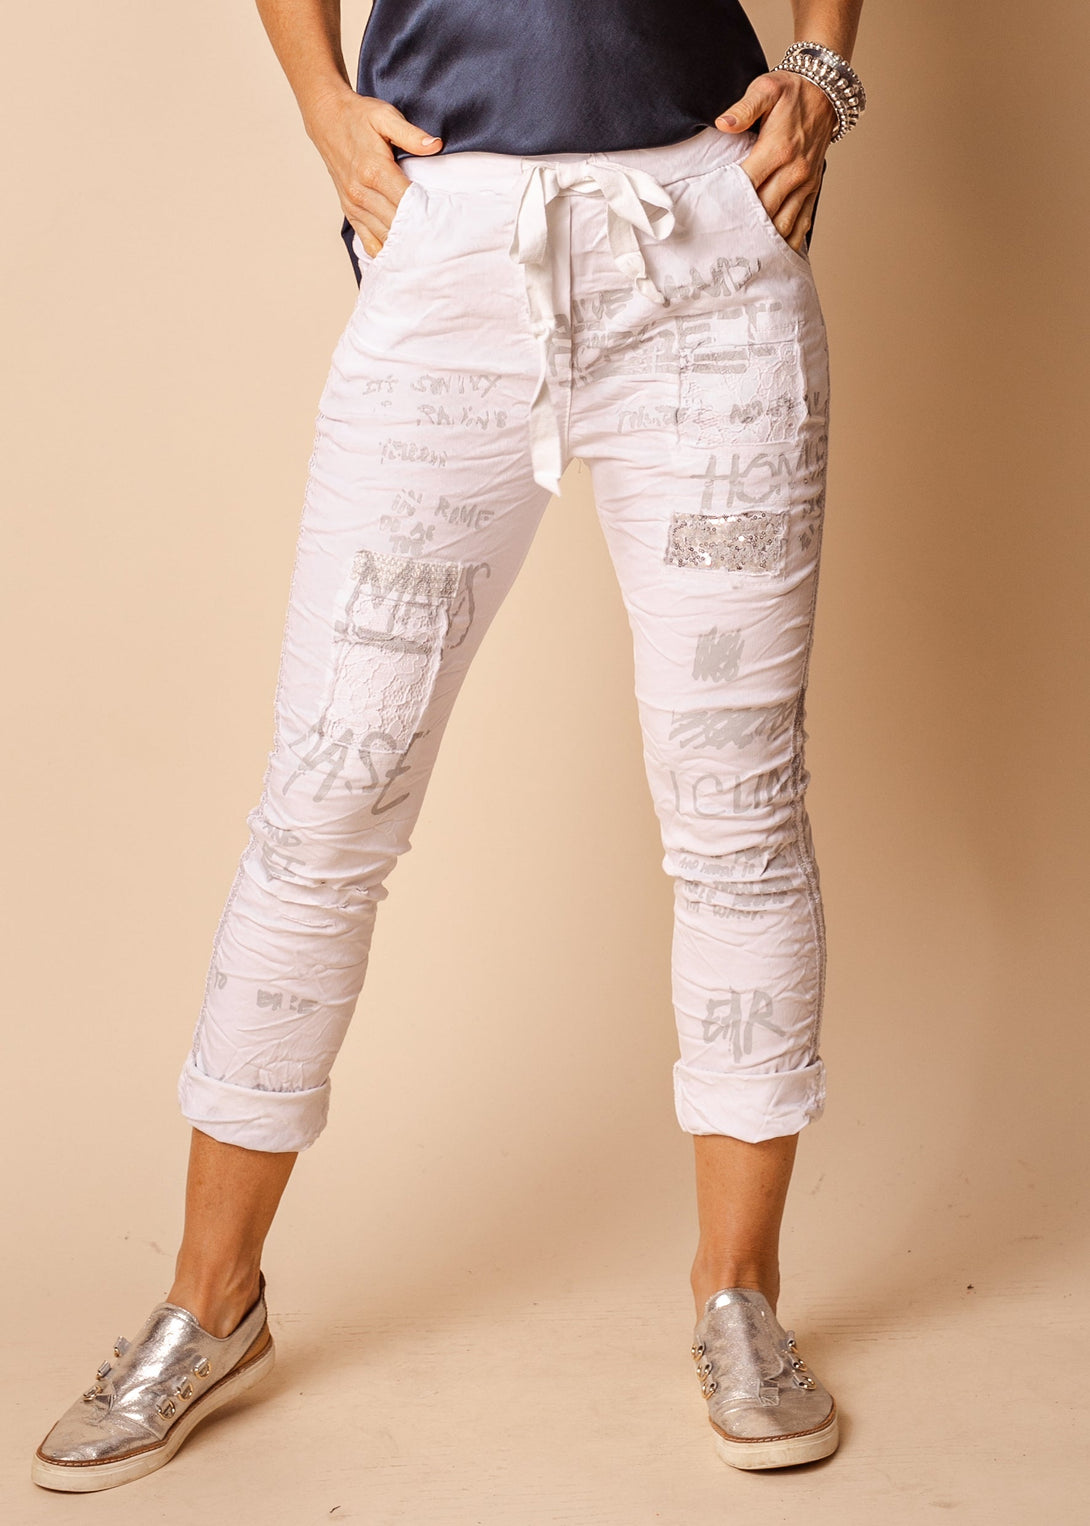 Livia Pants in White - Imagine Fashion